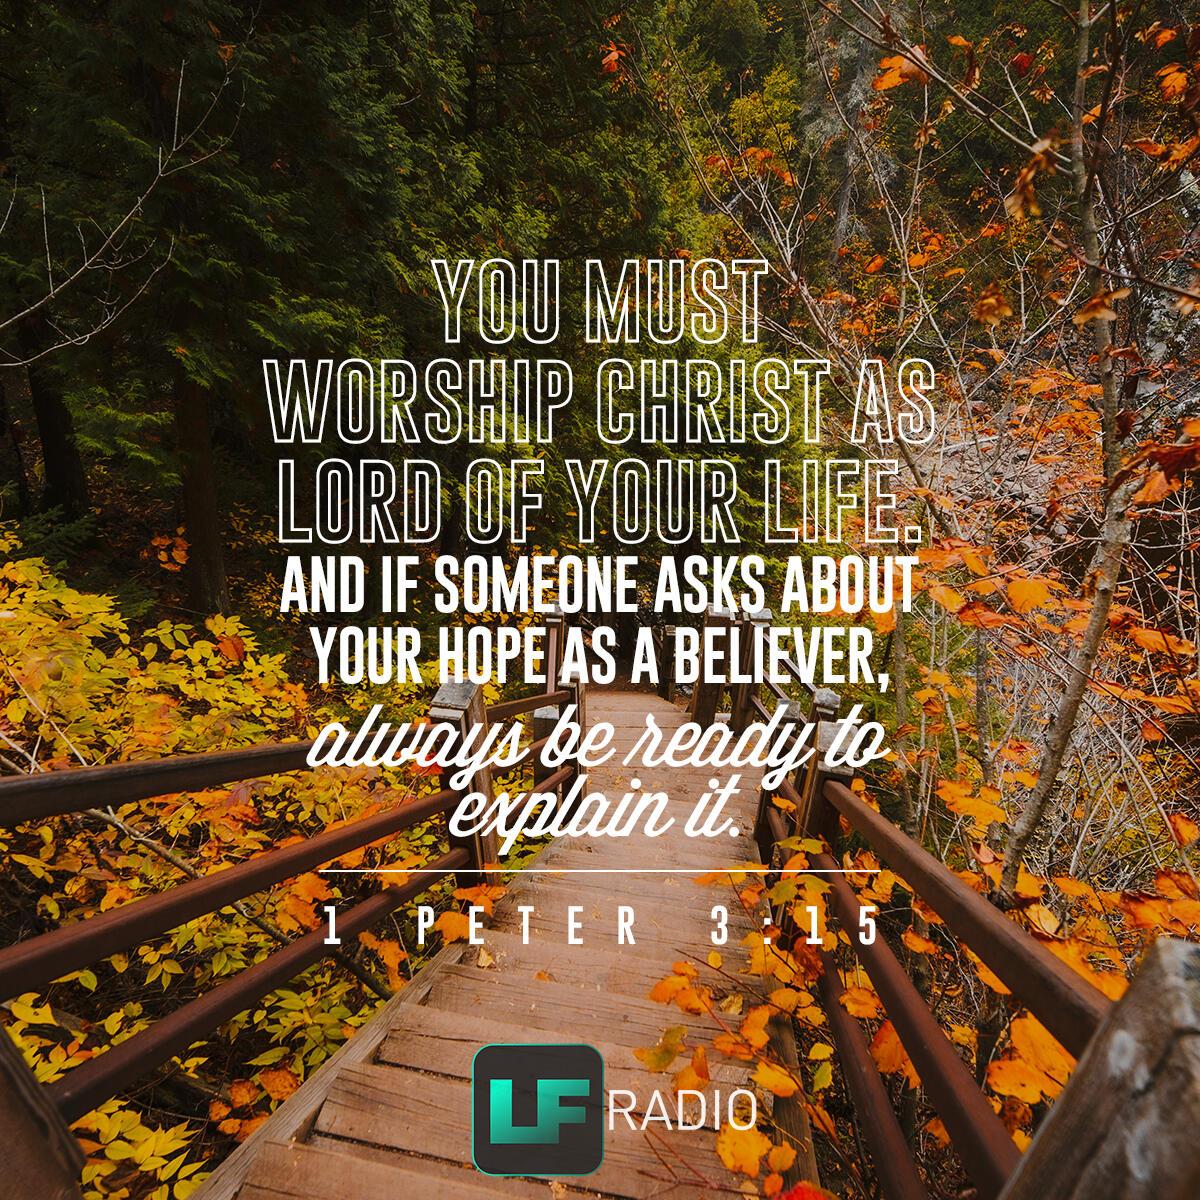 1 Peter 3:15